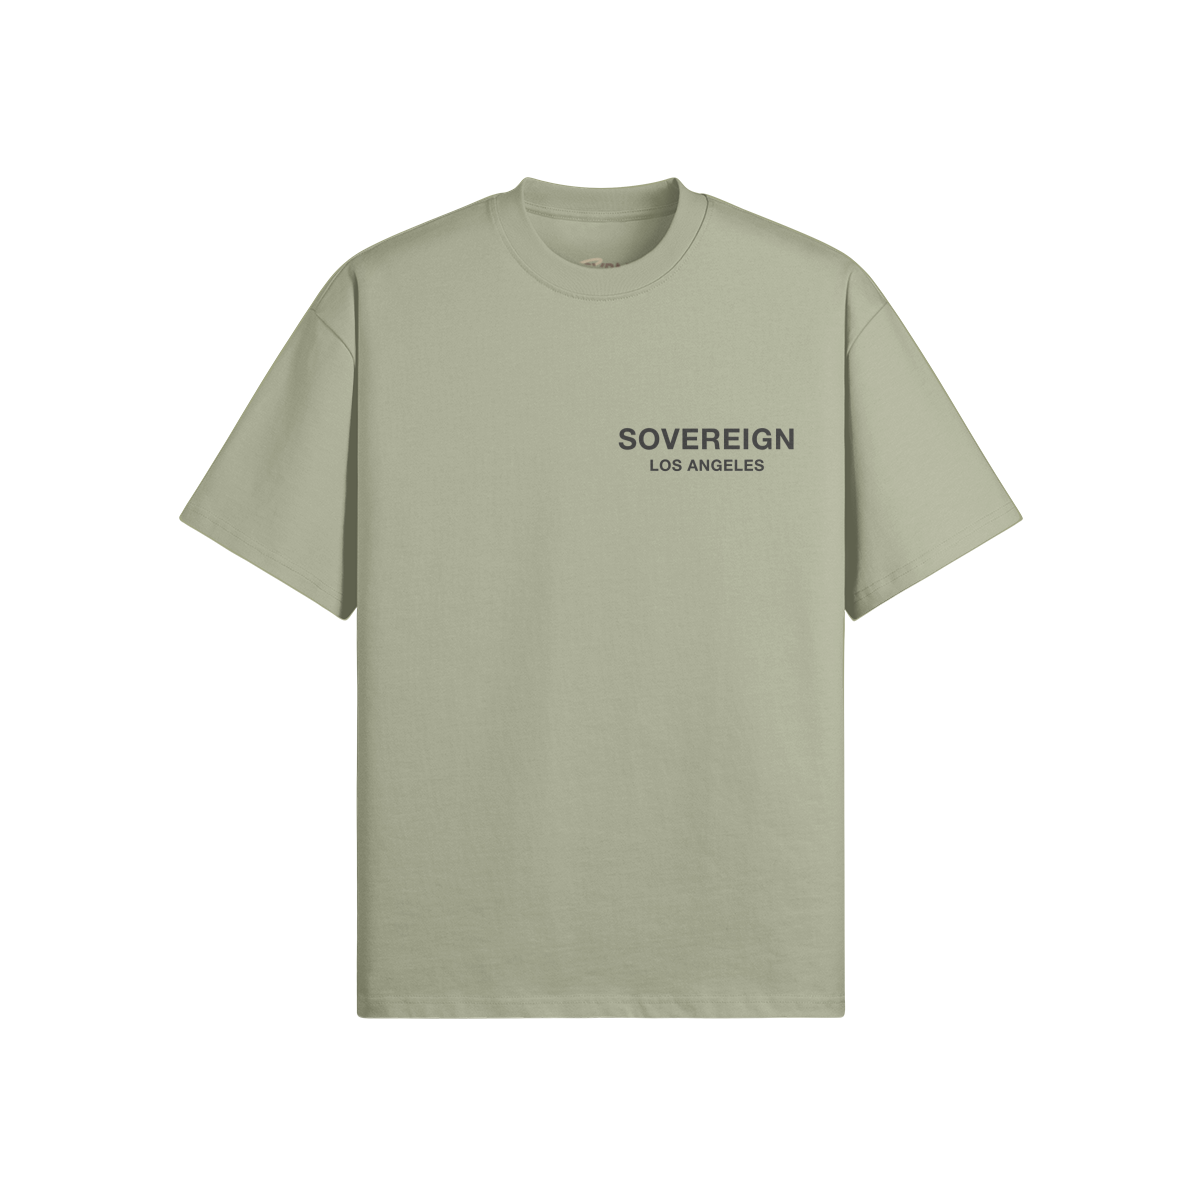 SVRN LA Sovereign Heavyweight T-Shirt